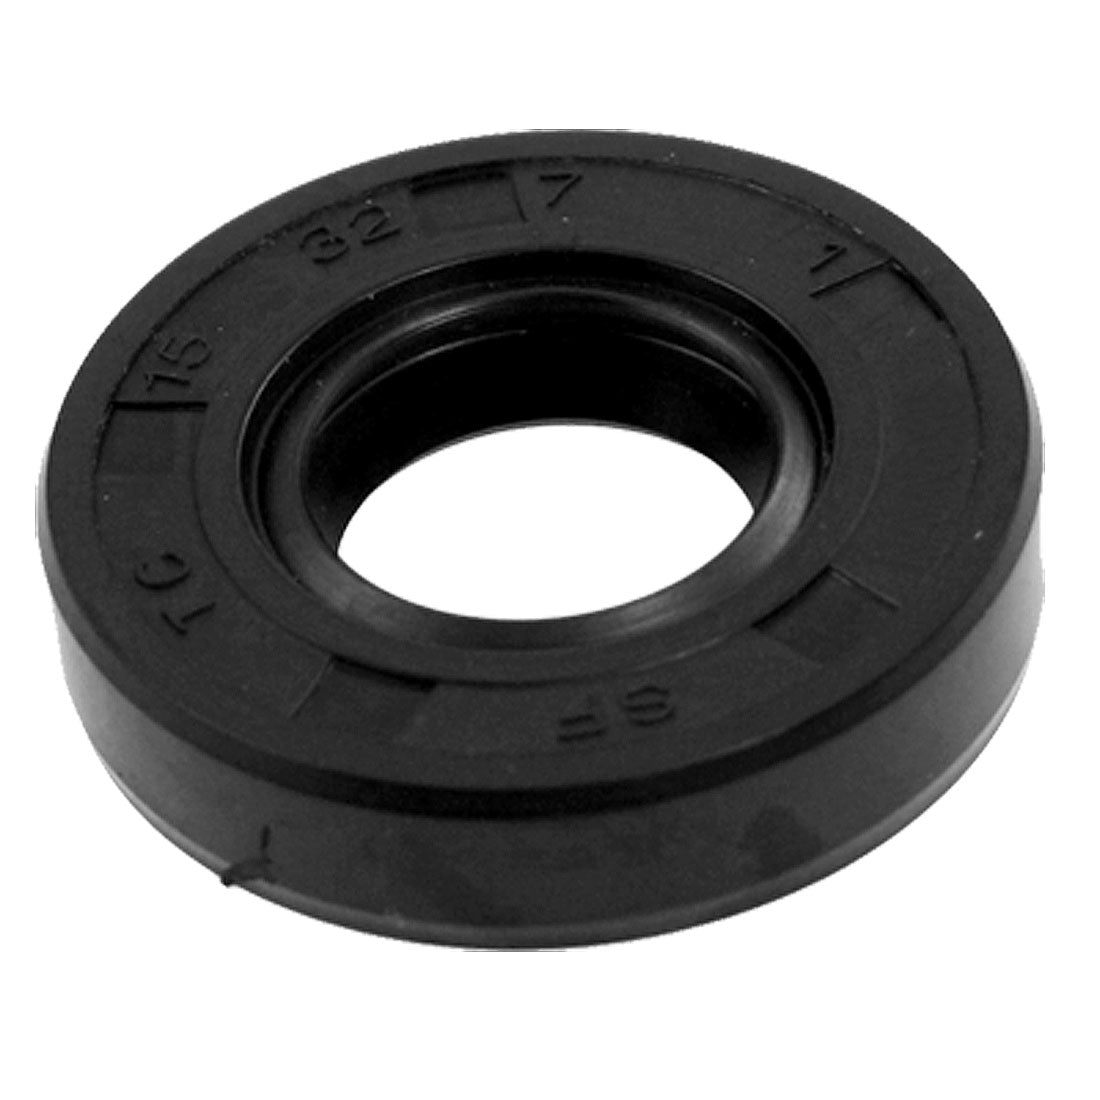 Hydraulic Seal Piston Shaft U32i PU Oil Sealing O-Ring 24mm-45mm Outer  Diameter